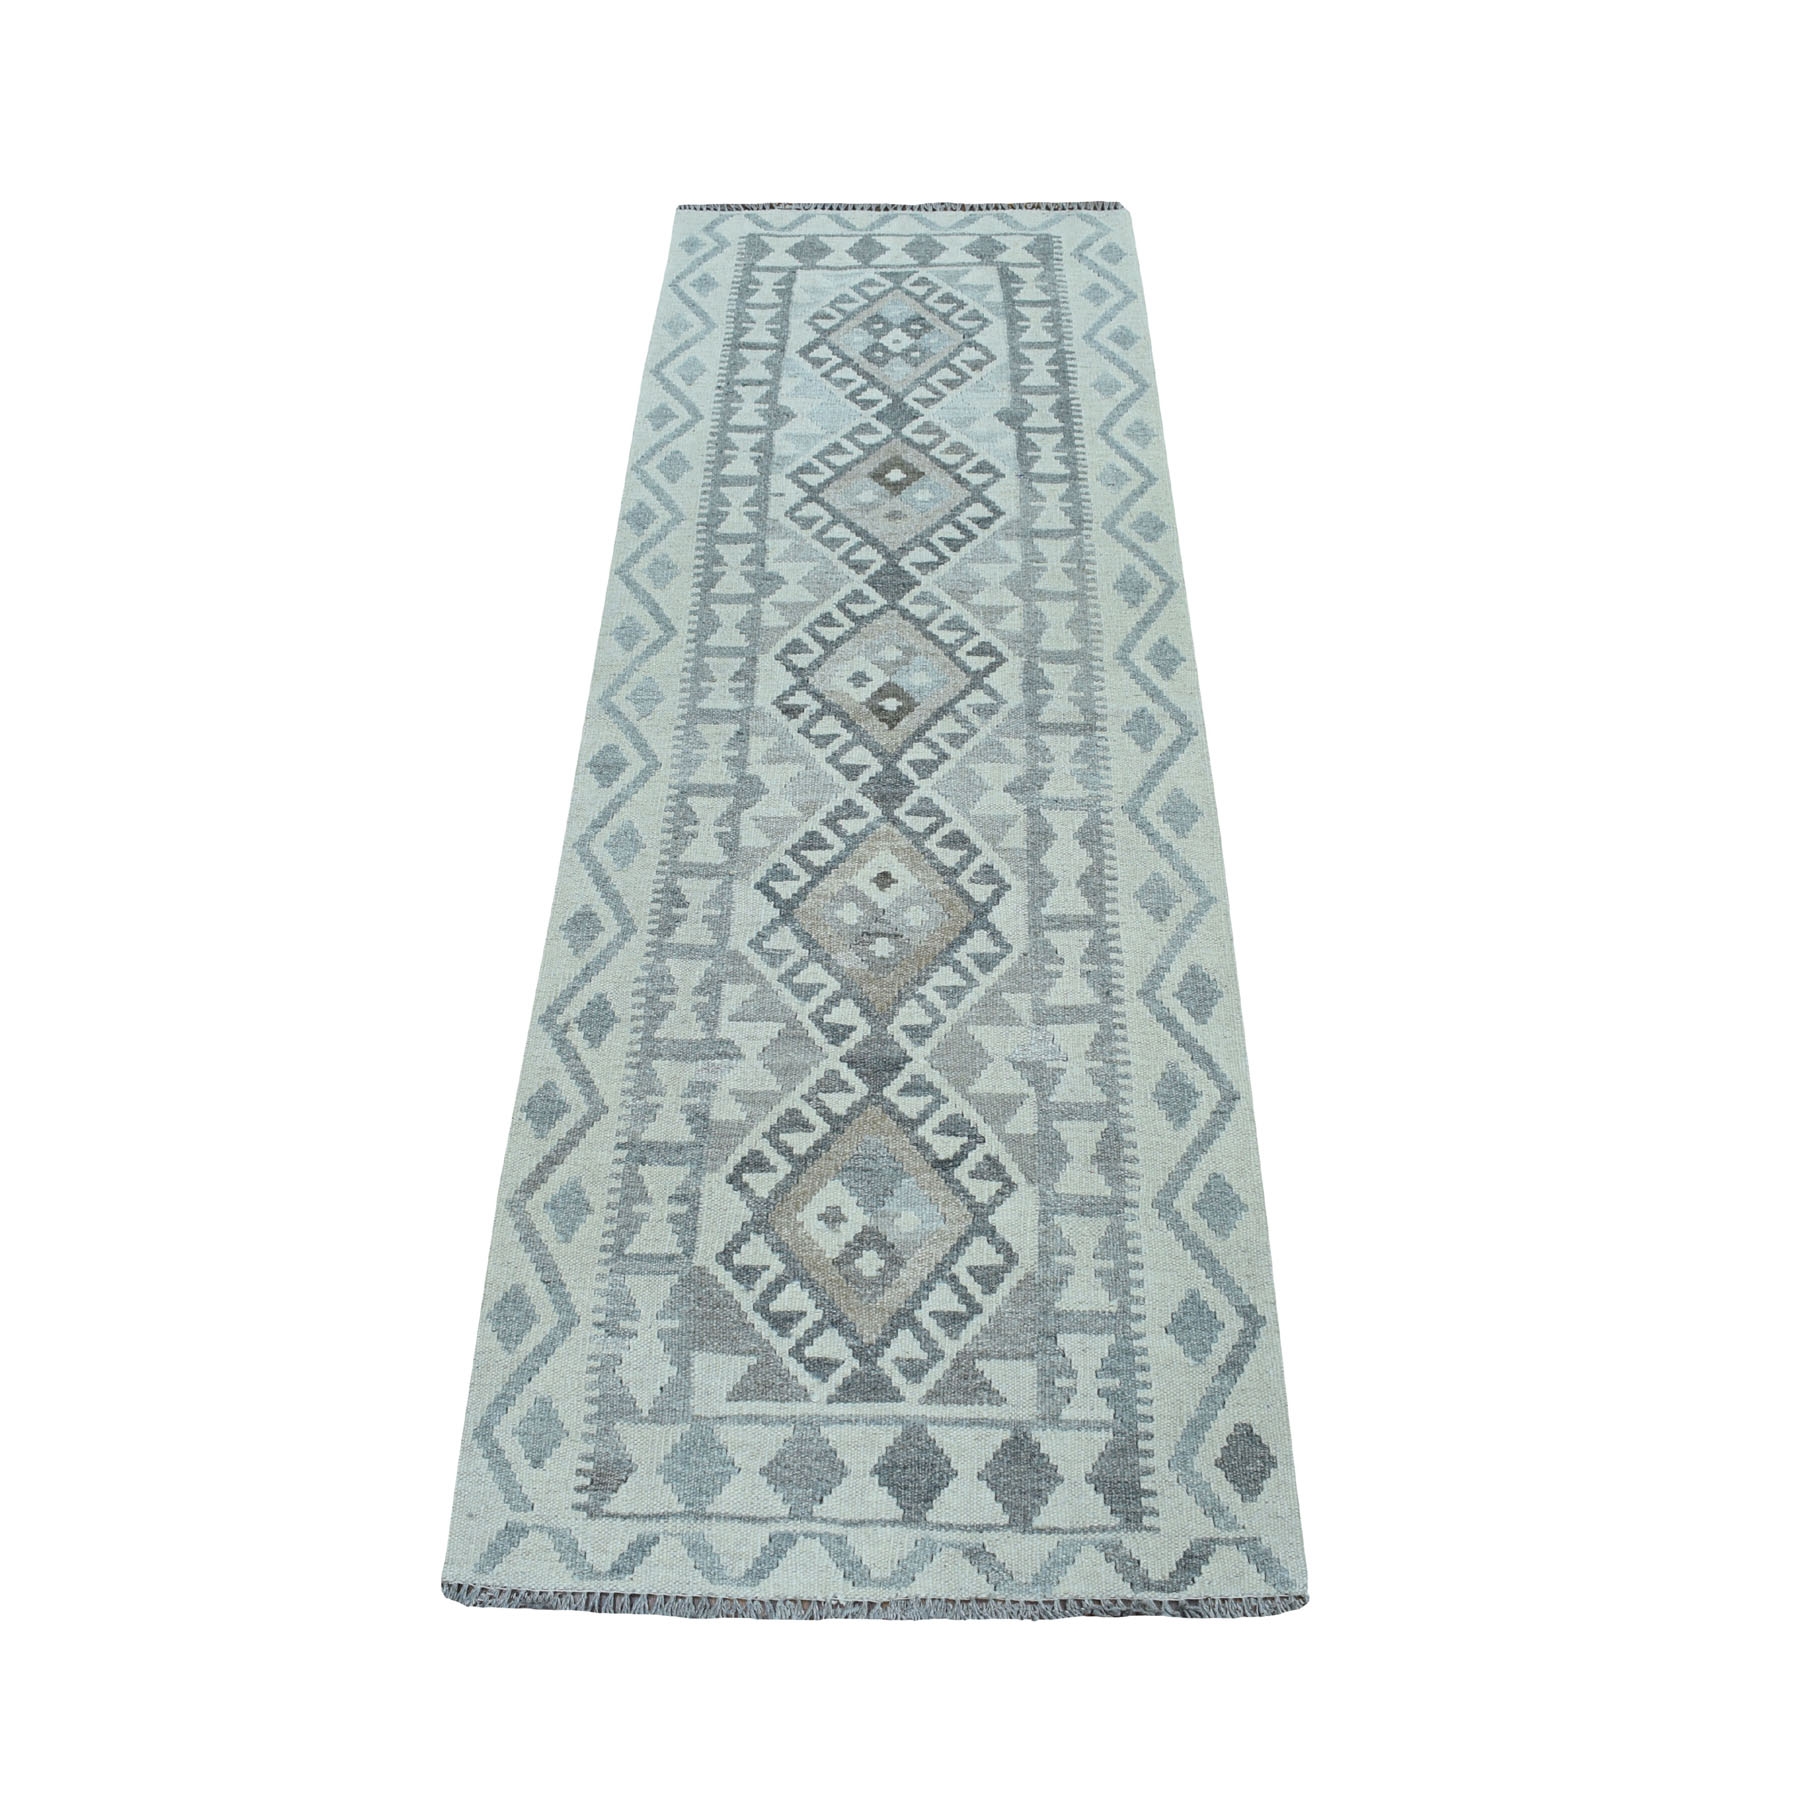 2'2"X6'2" Undyed Natural Wool Afghan Kilim Reversible Hand Woven Runner Oriental Rug moaec0ee